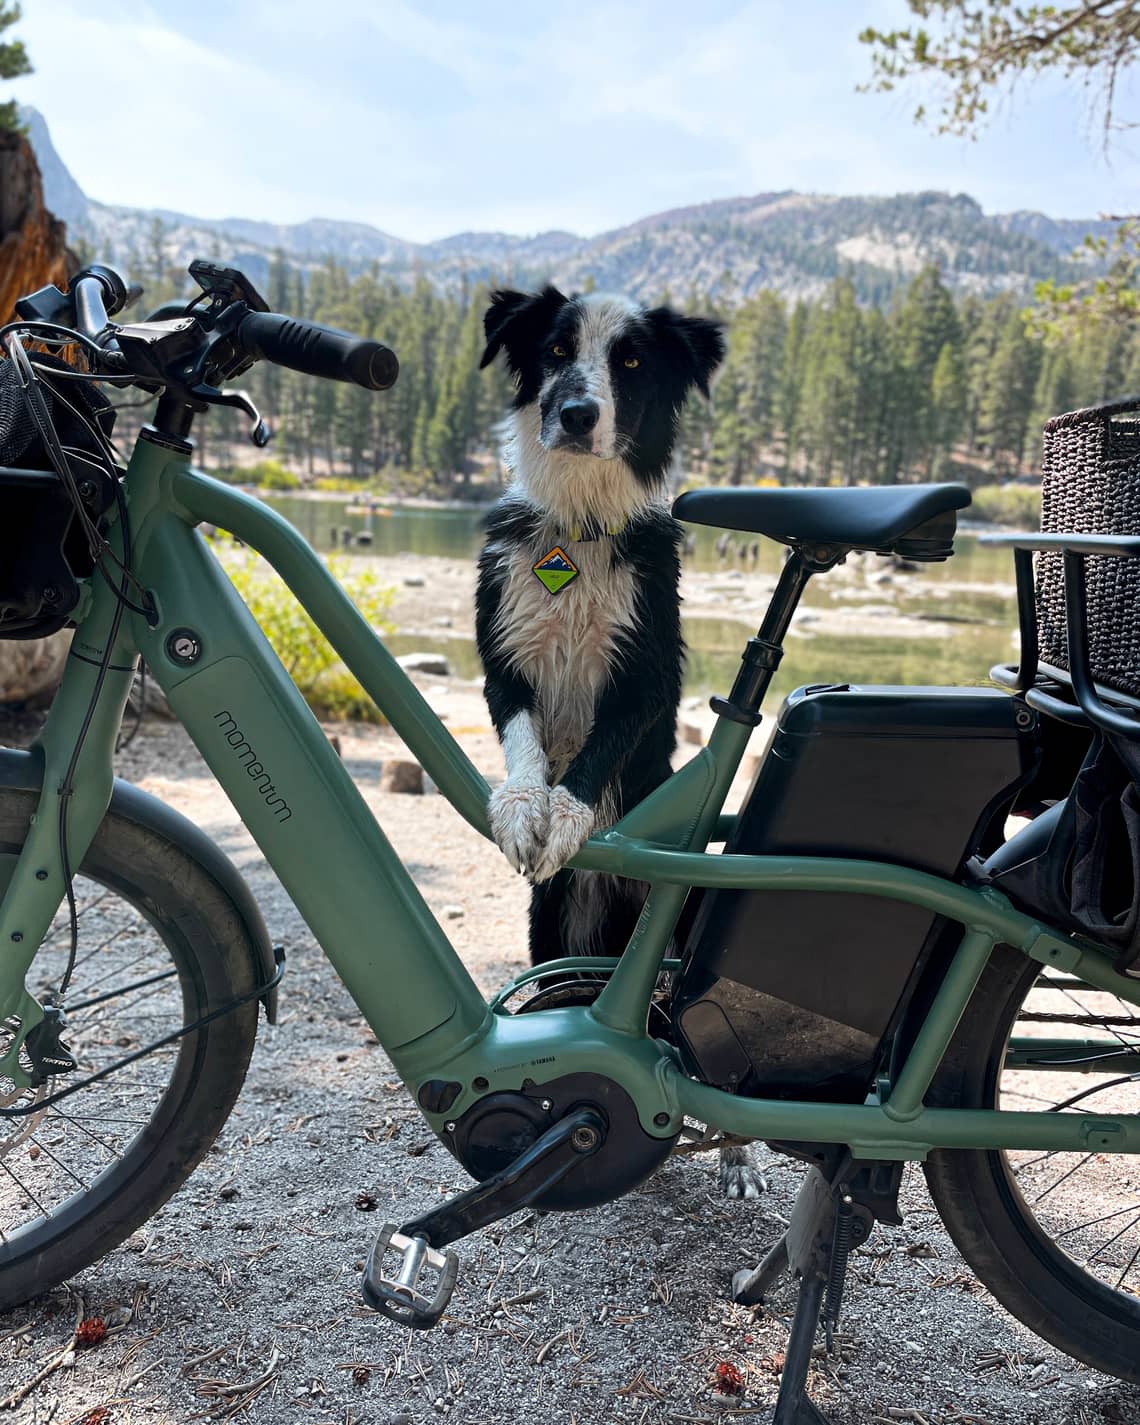 Bike with dog, electric bikes